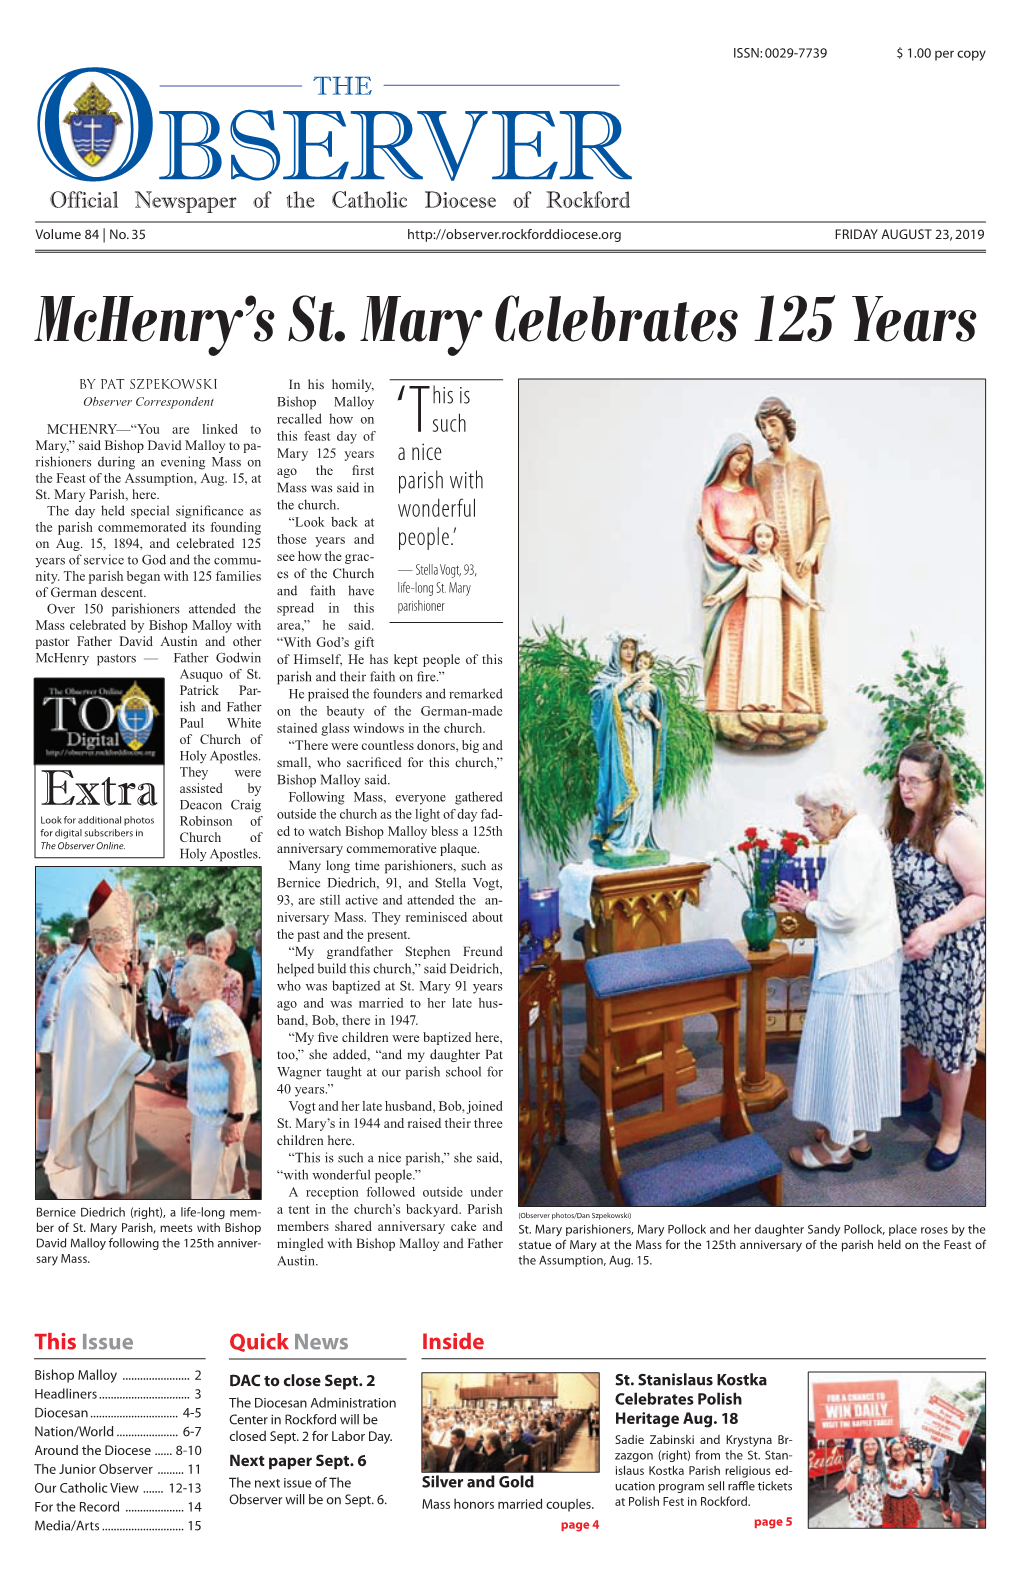 Mchenry's St. Mary Celebrates 125 Years